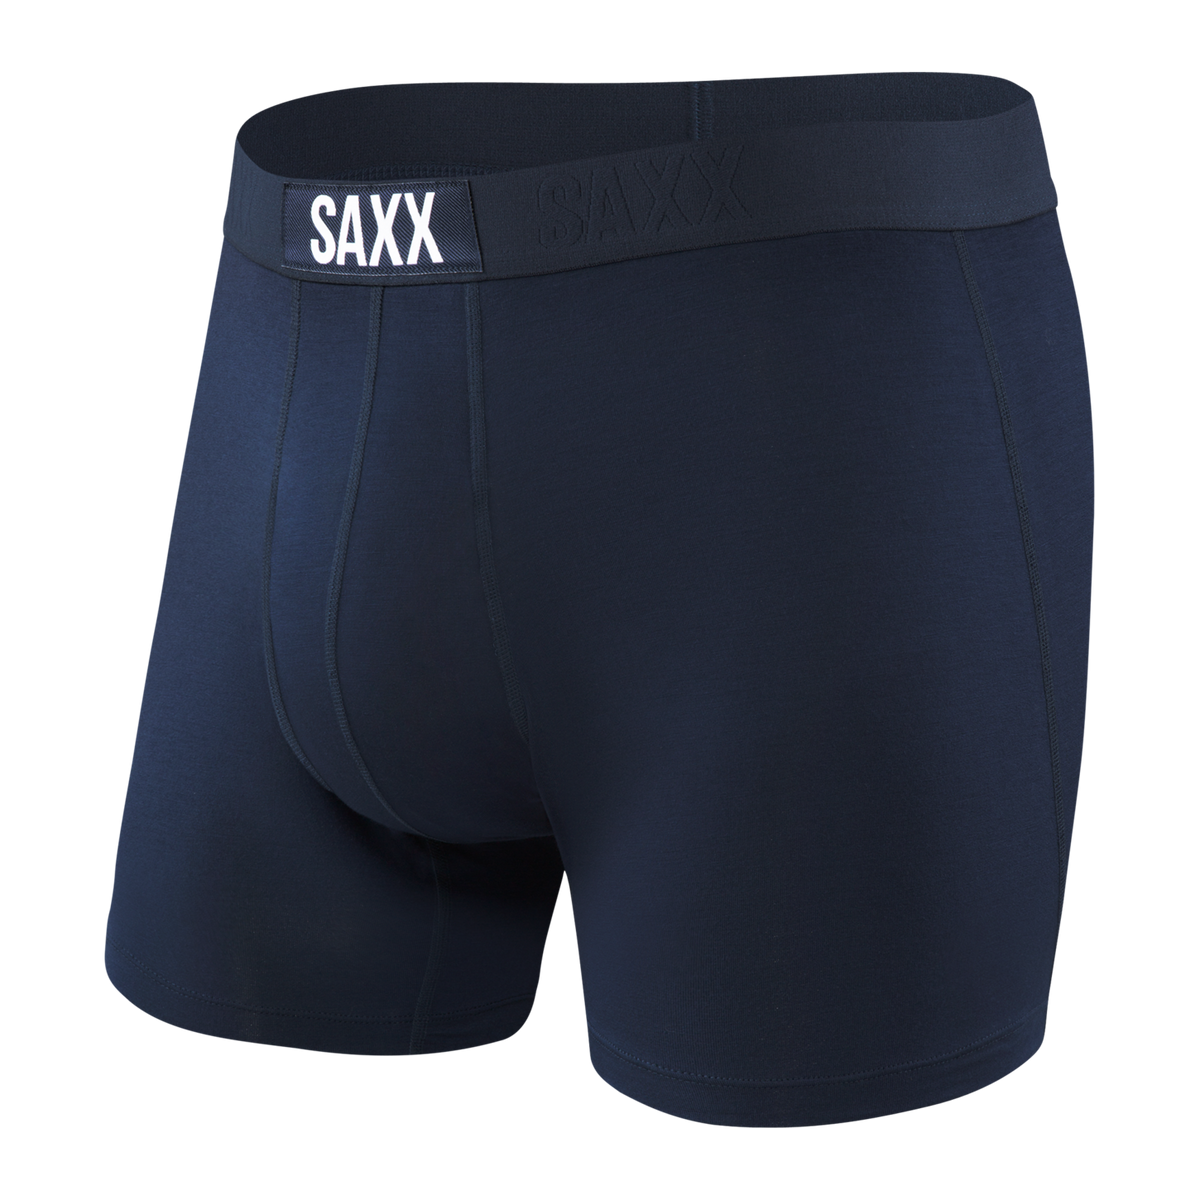 Saxx Vibe Boxer Brief - Pants Store